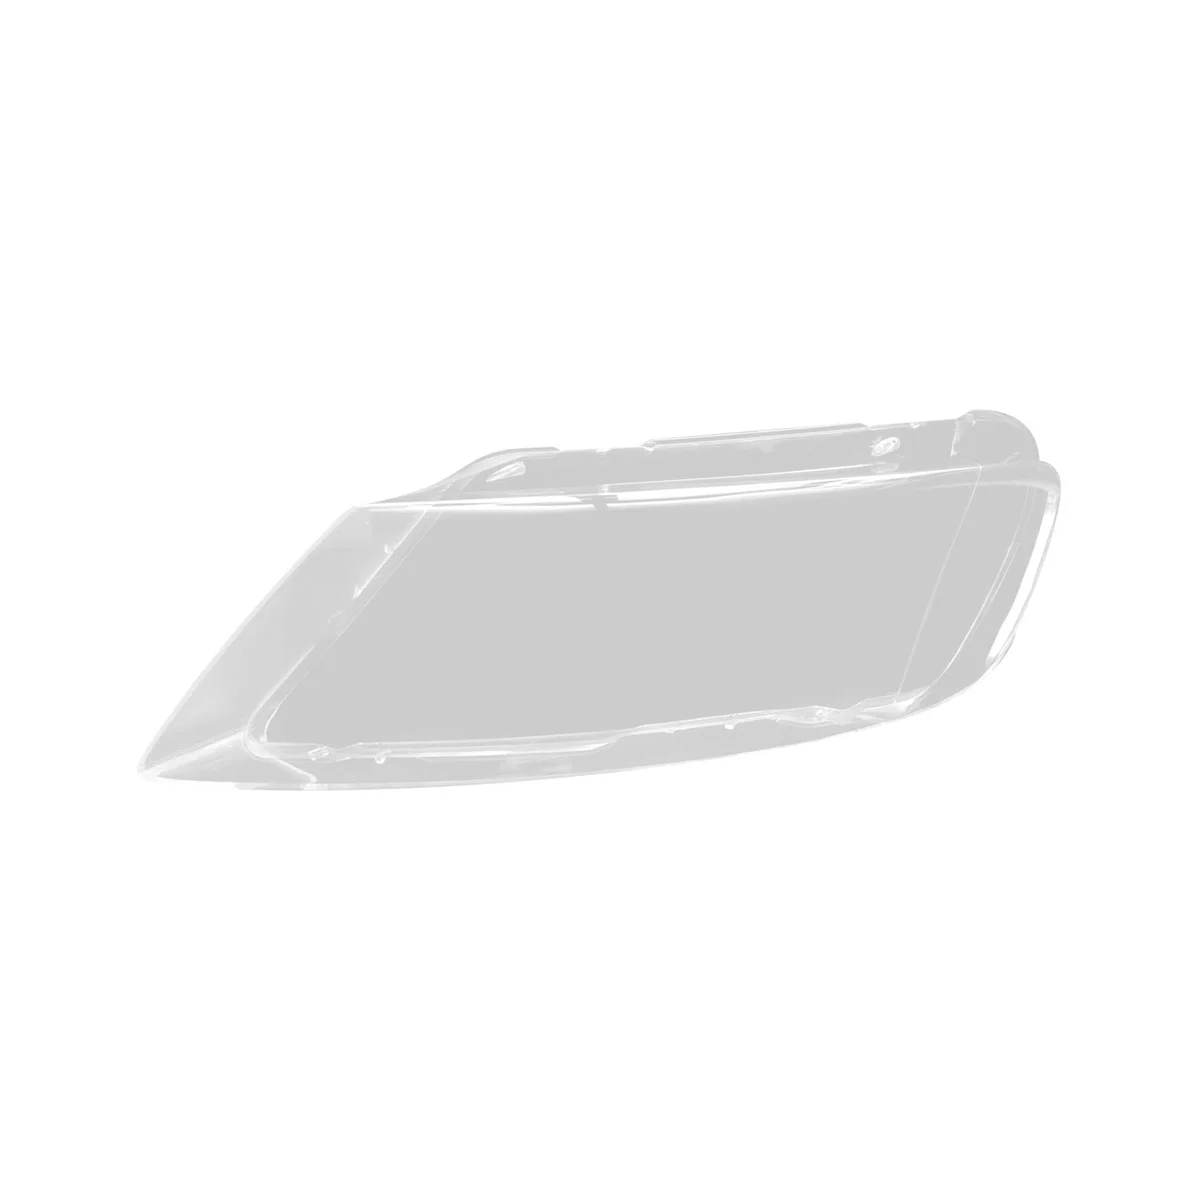 

Чехол для автомобильной левой фары, прозрачная крышка для объектива, чехол для фары VW Phaeton 2004-2010